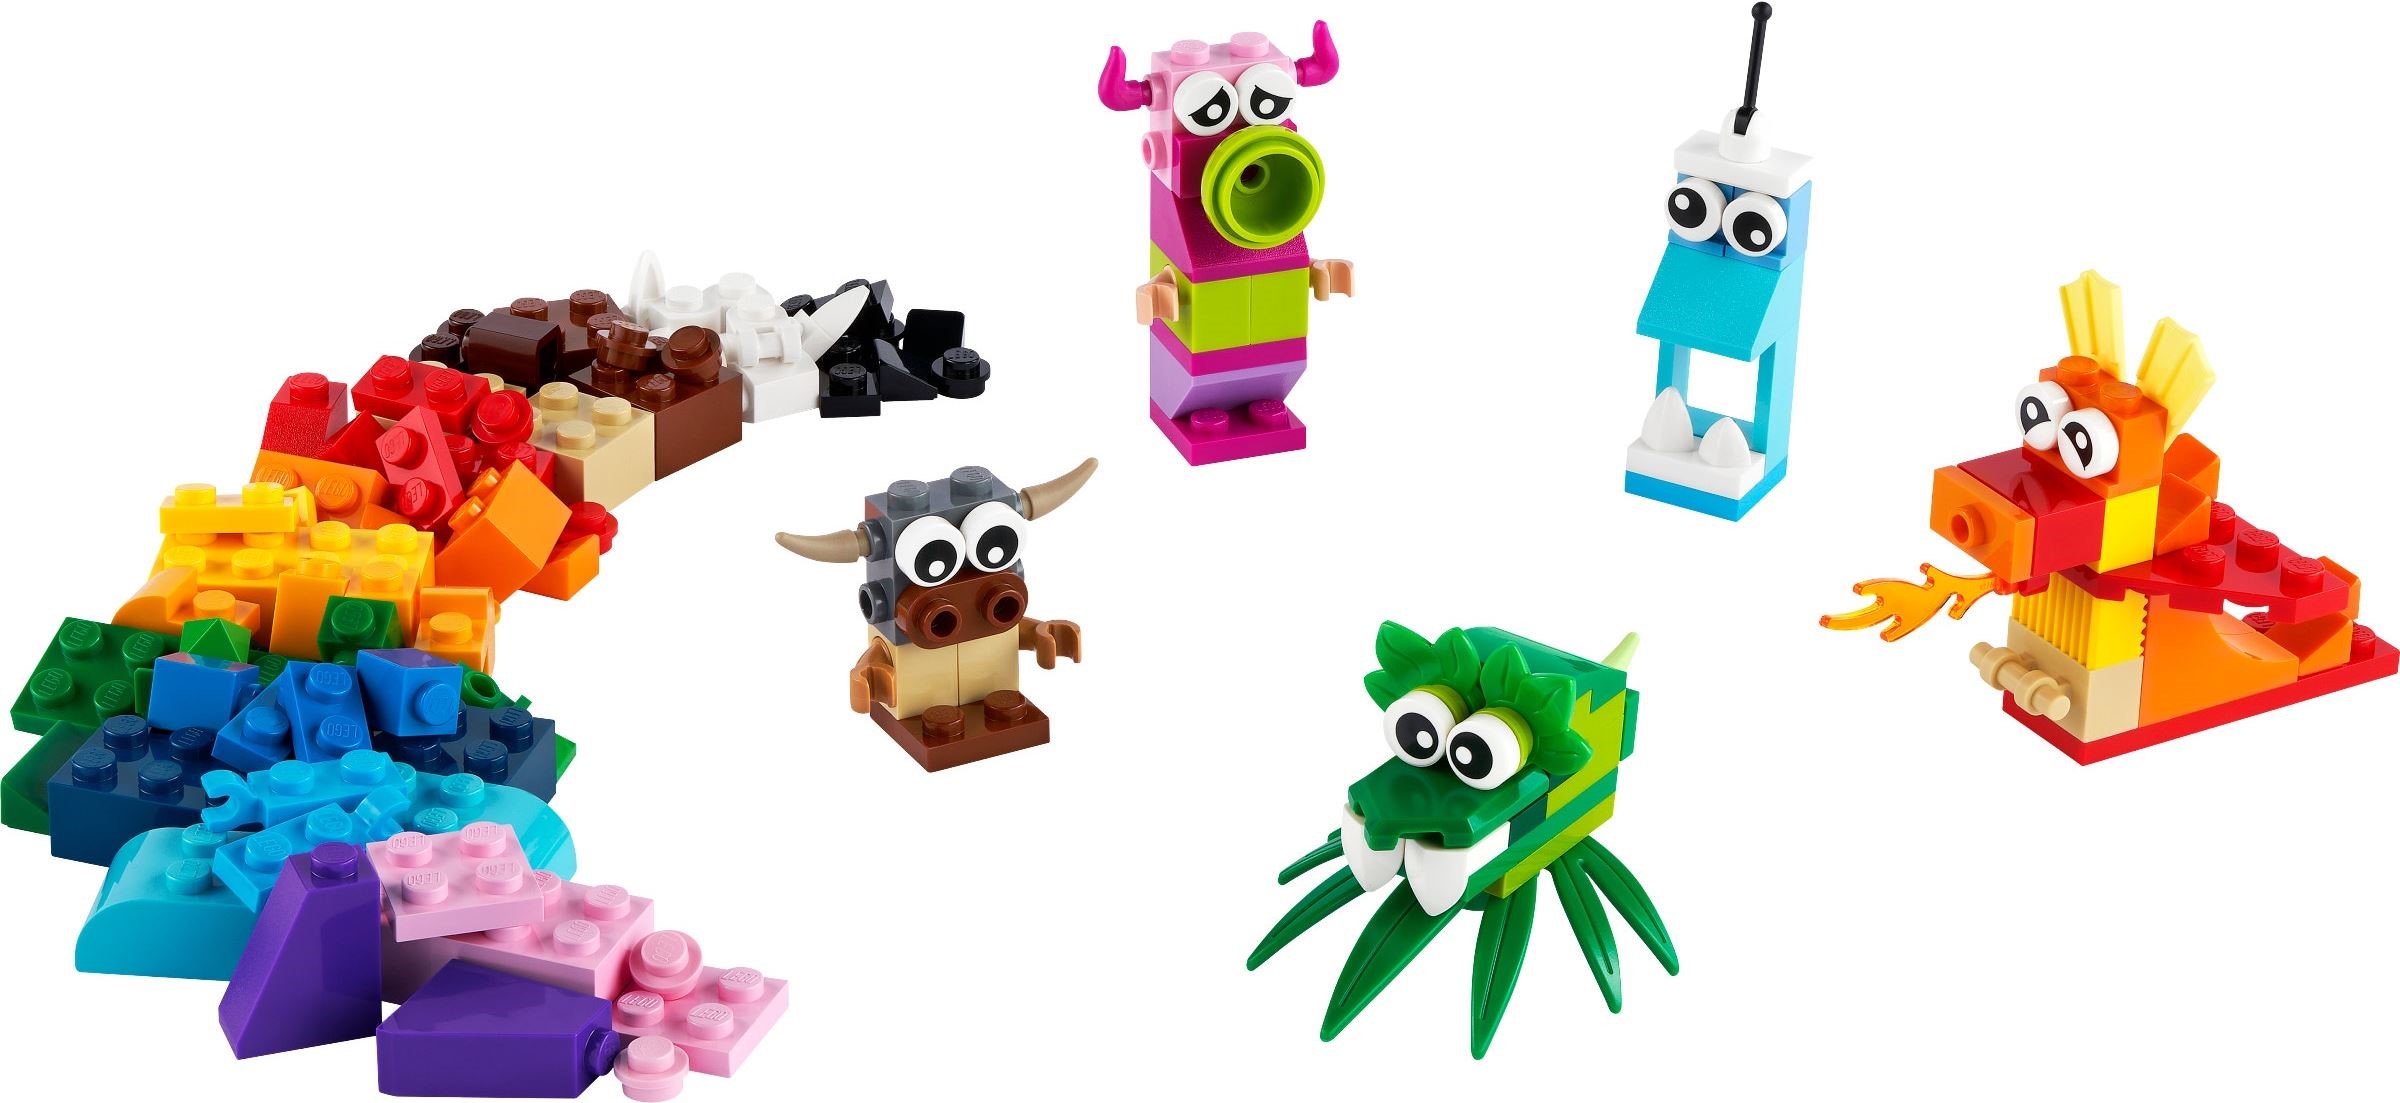 LEGO® Classic 11017 - Kreative Monster